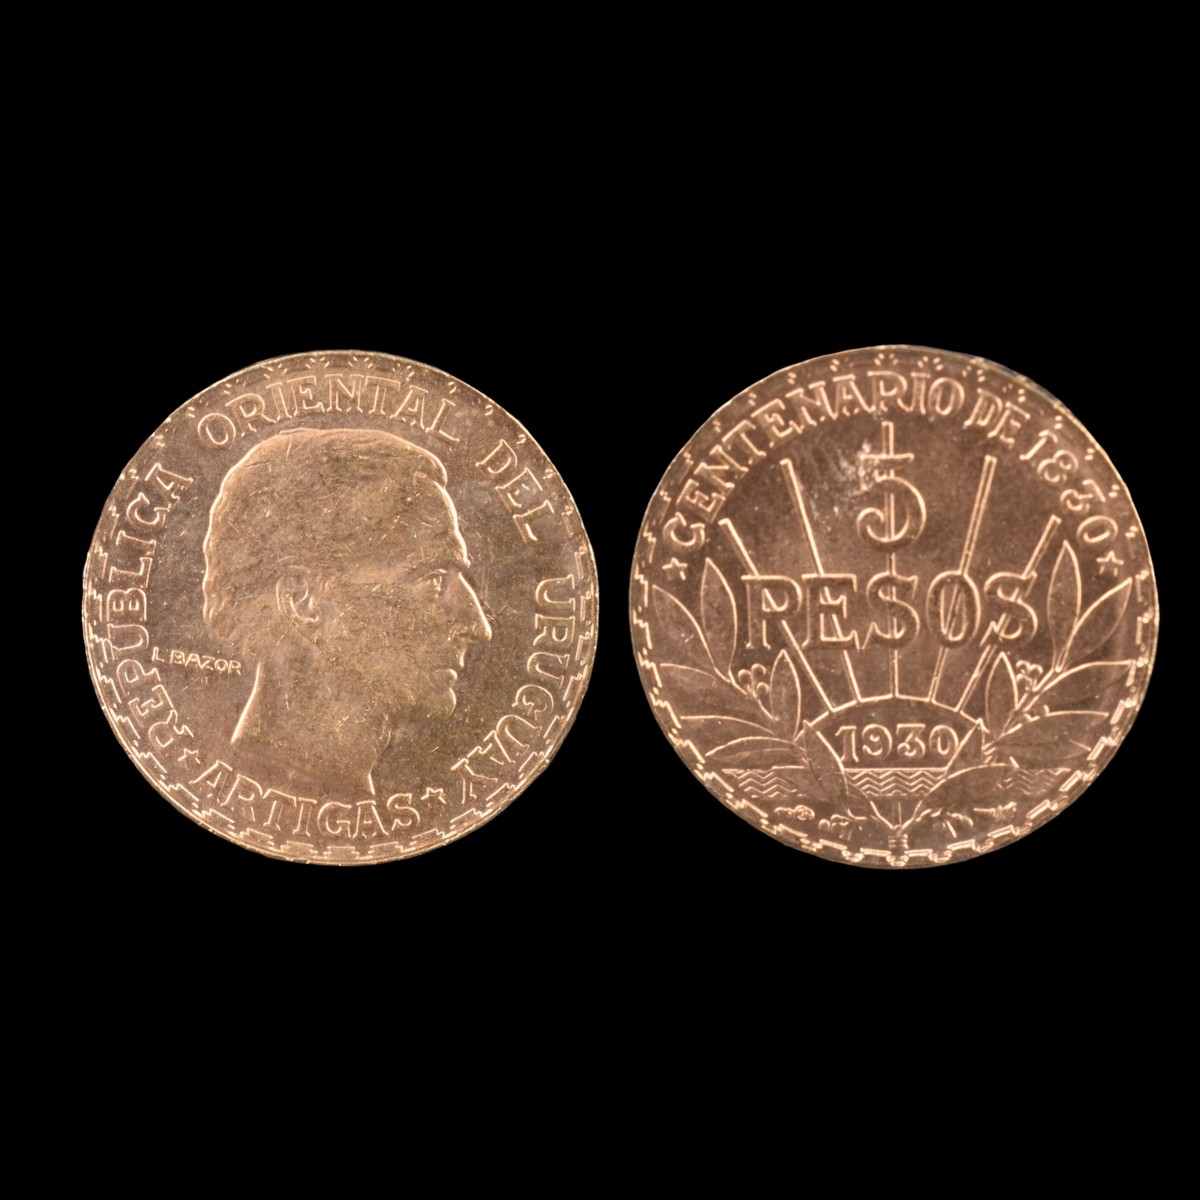 1930 Uruguay/Constitution Centennial Gold 5 Pesos